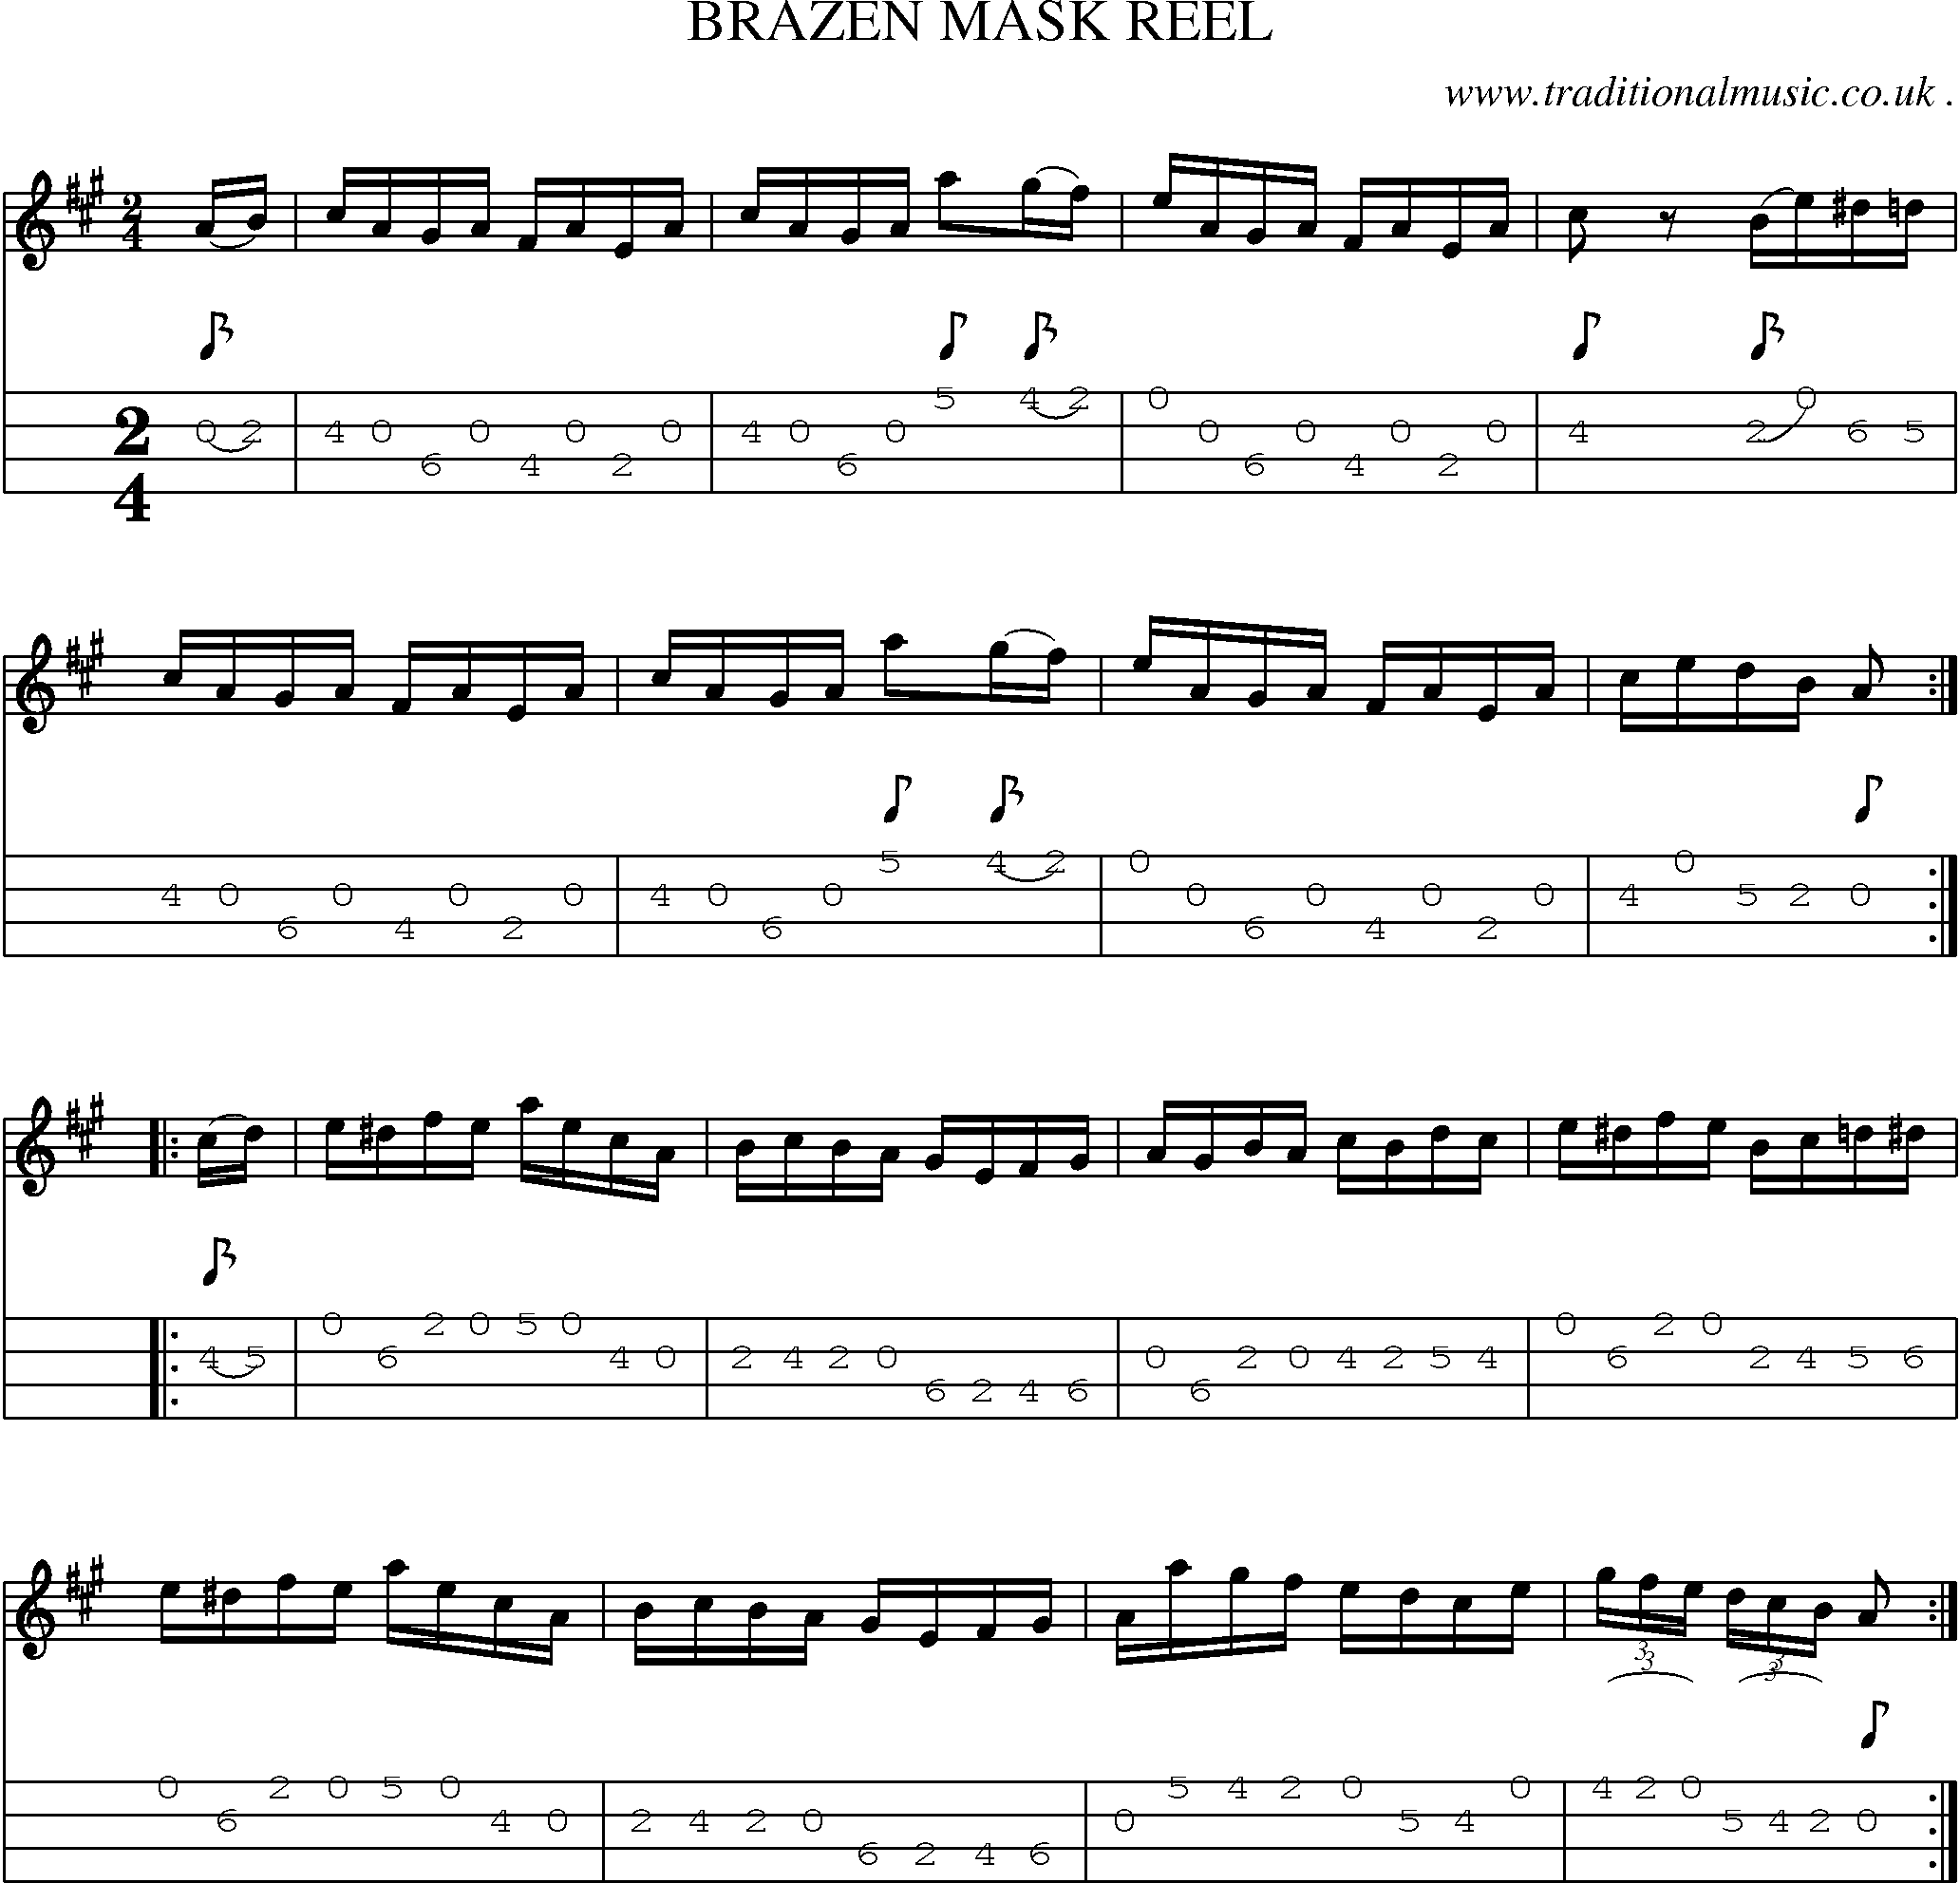 Sheet-Music and Mandolin Tabs for Brazen Mask Reel